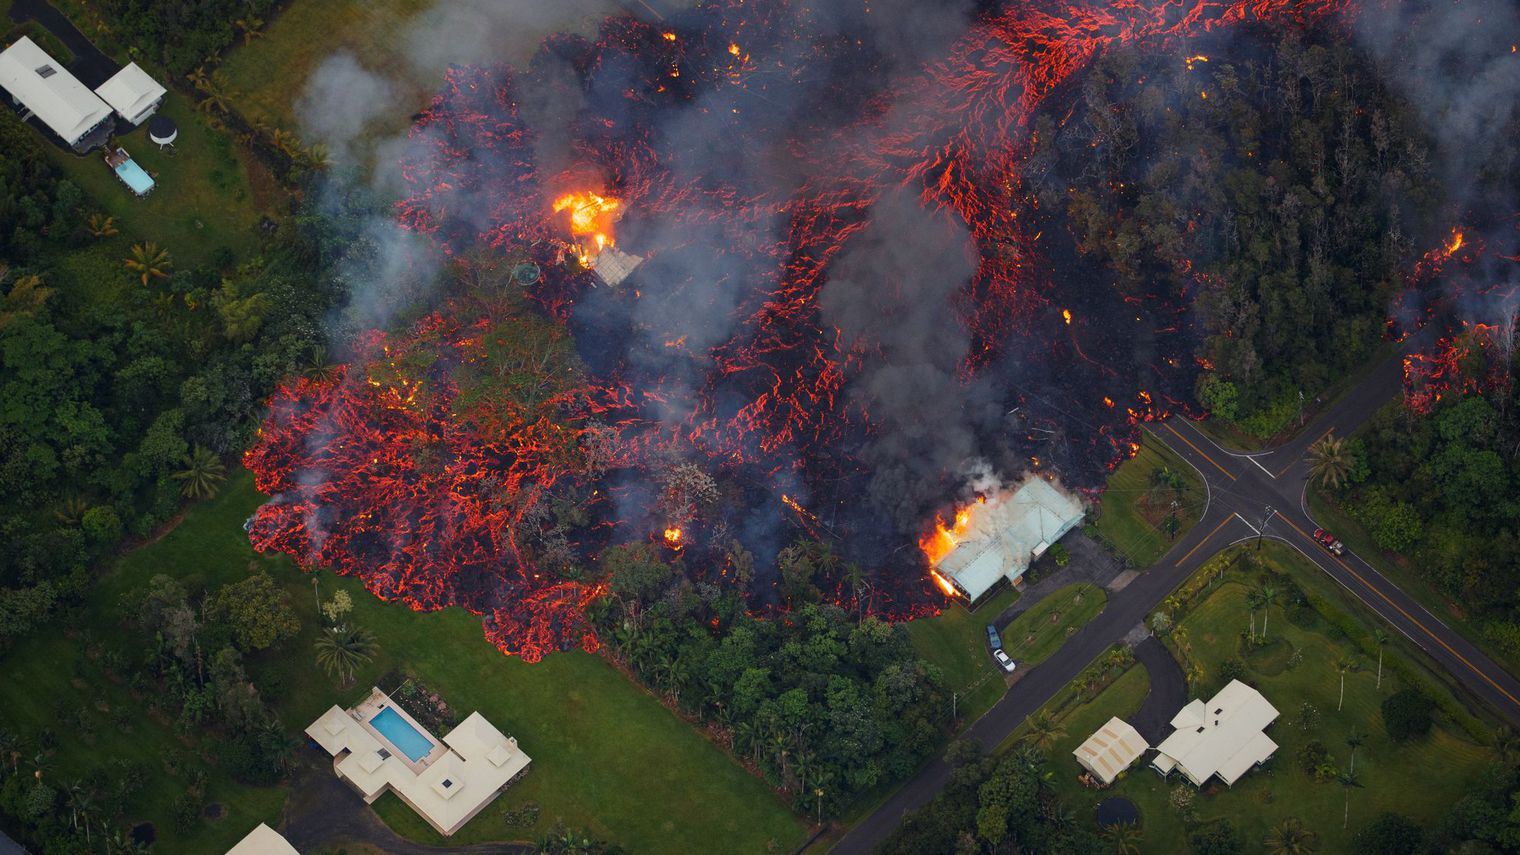 Nom : hawaii-s-kilauea-volcano-eruption_6056022.jpg
Affichages : 122
Taille : 230,4 Ko